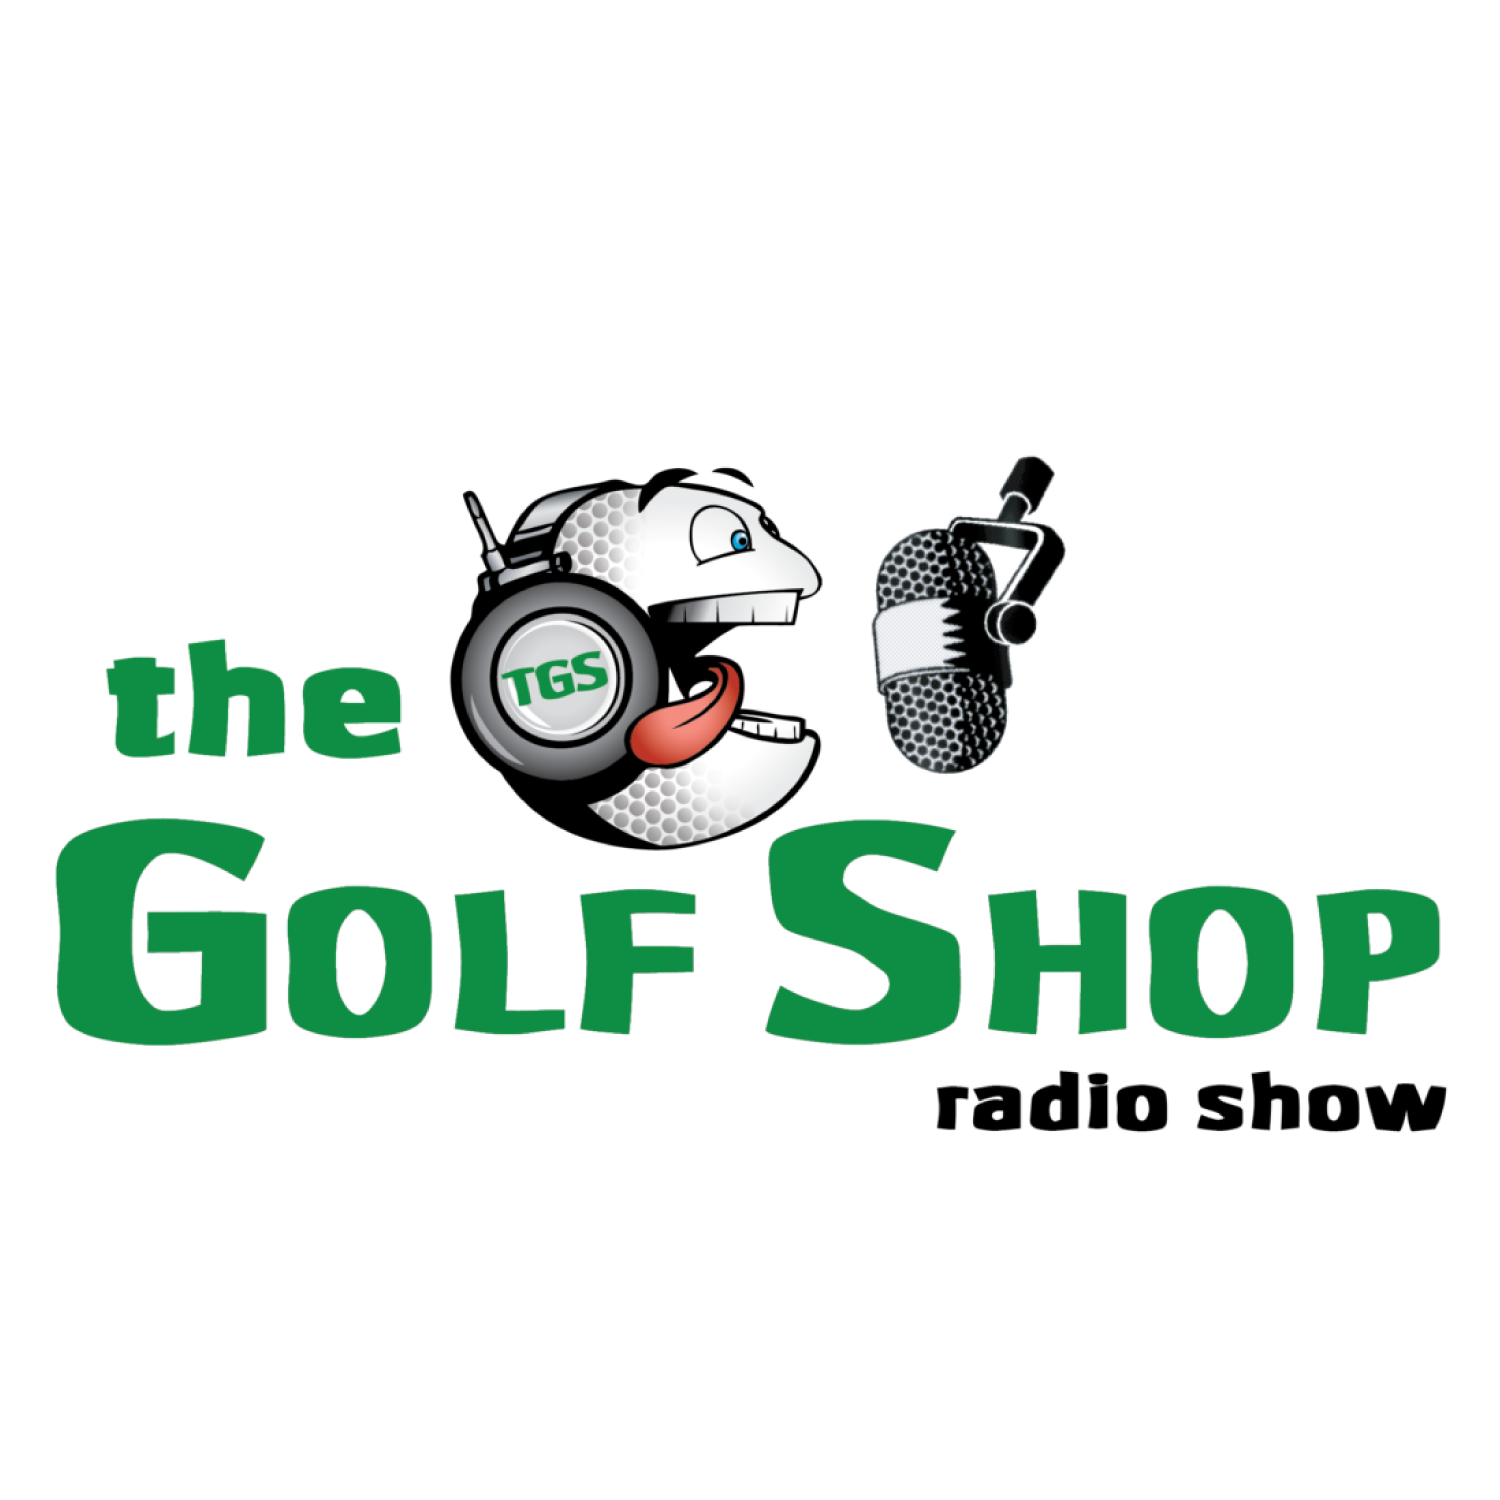 The Golf Shop Radio Show